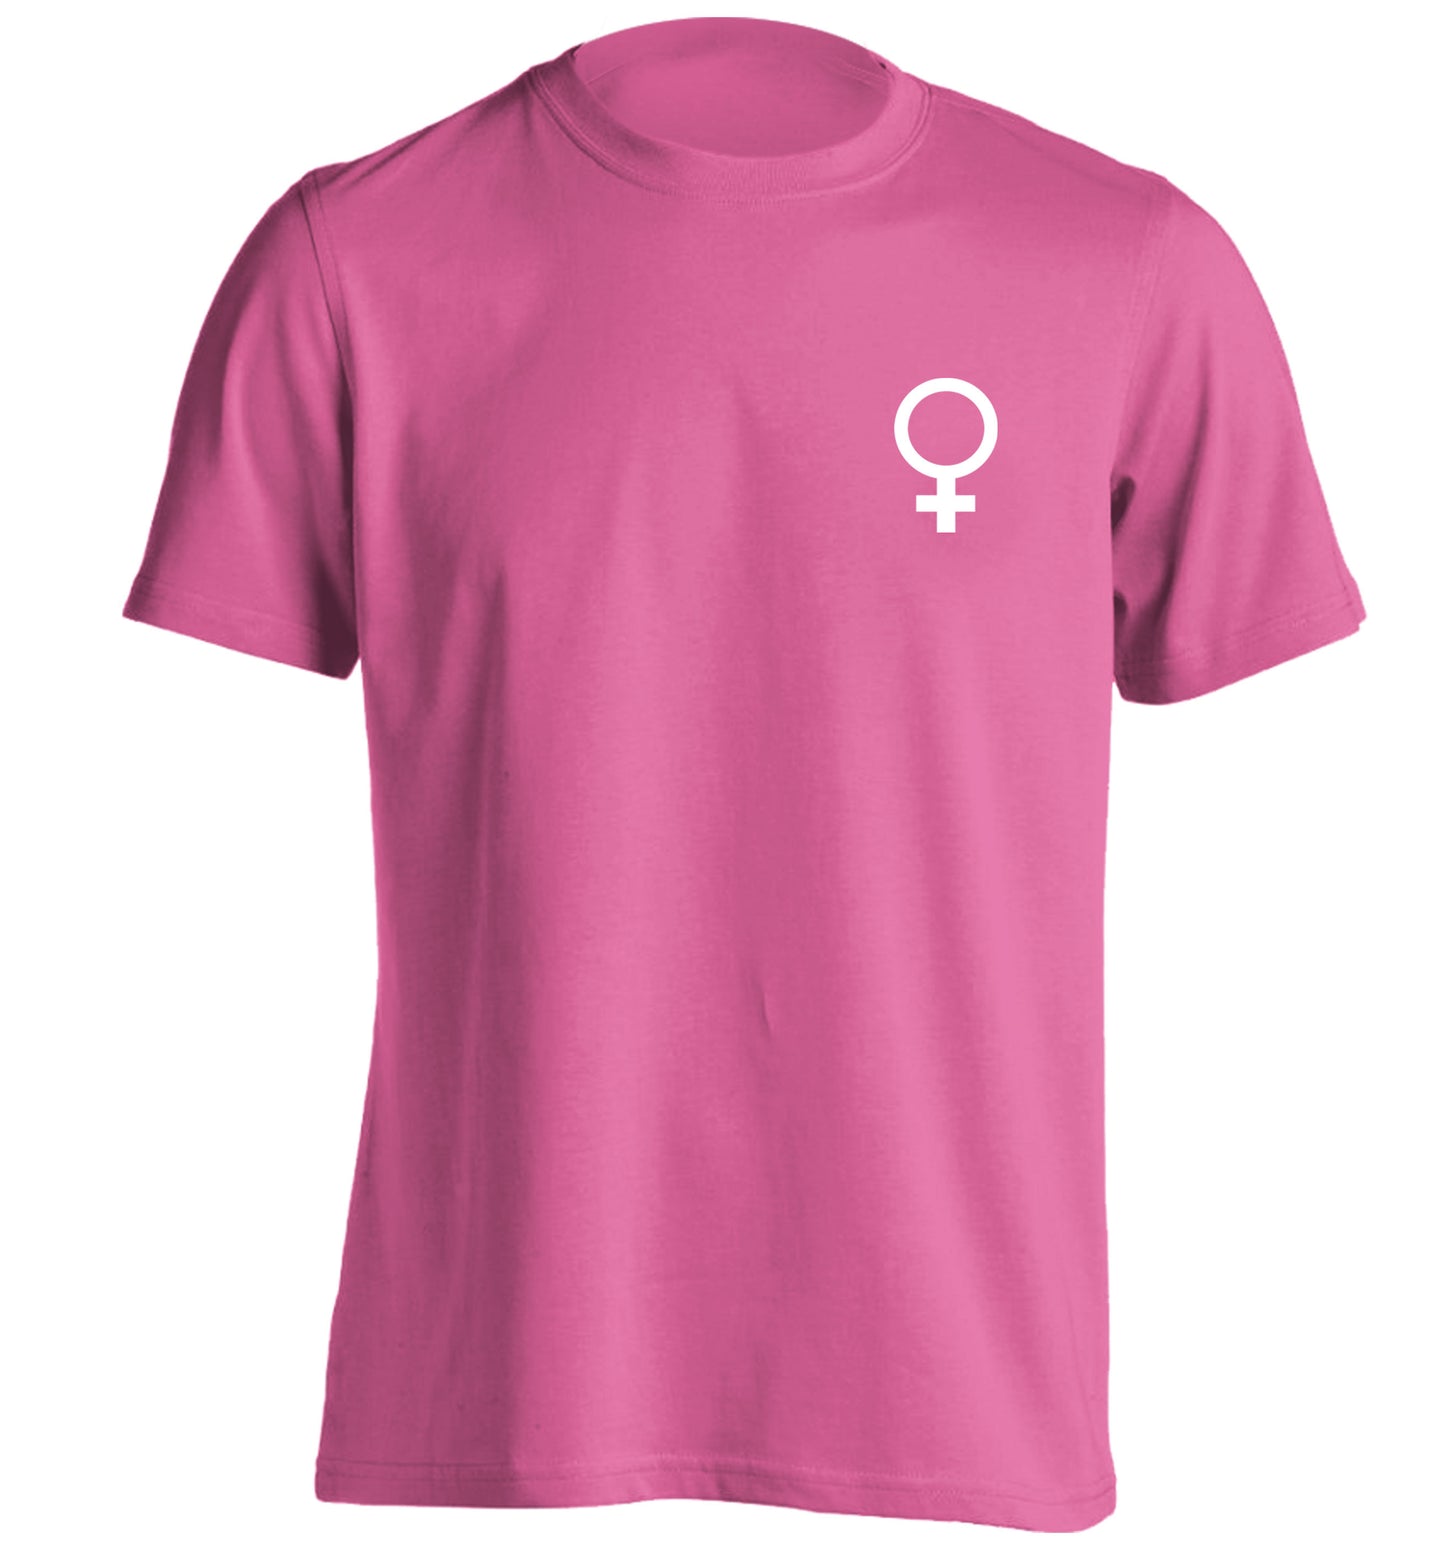 Female pocket symbol adults unisex pink Tshirt 2XL